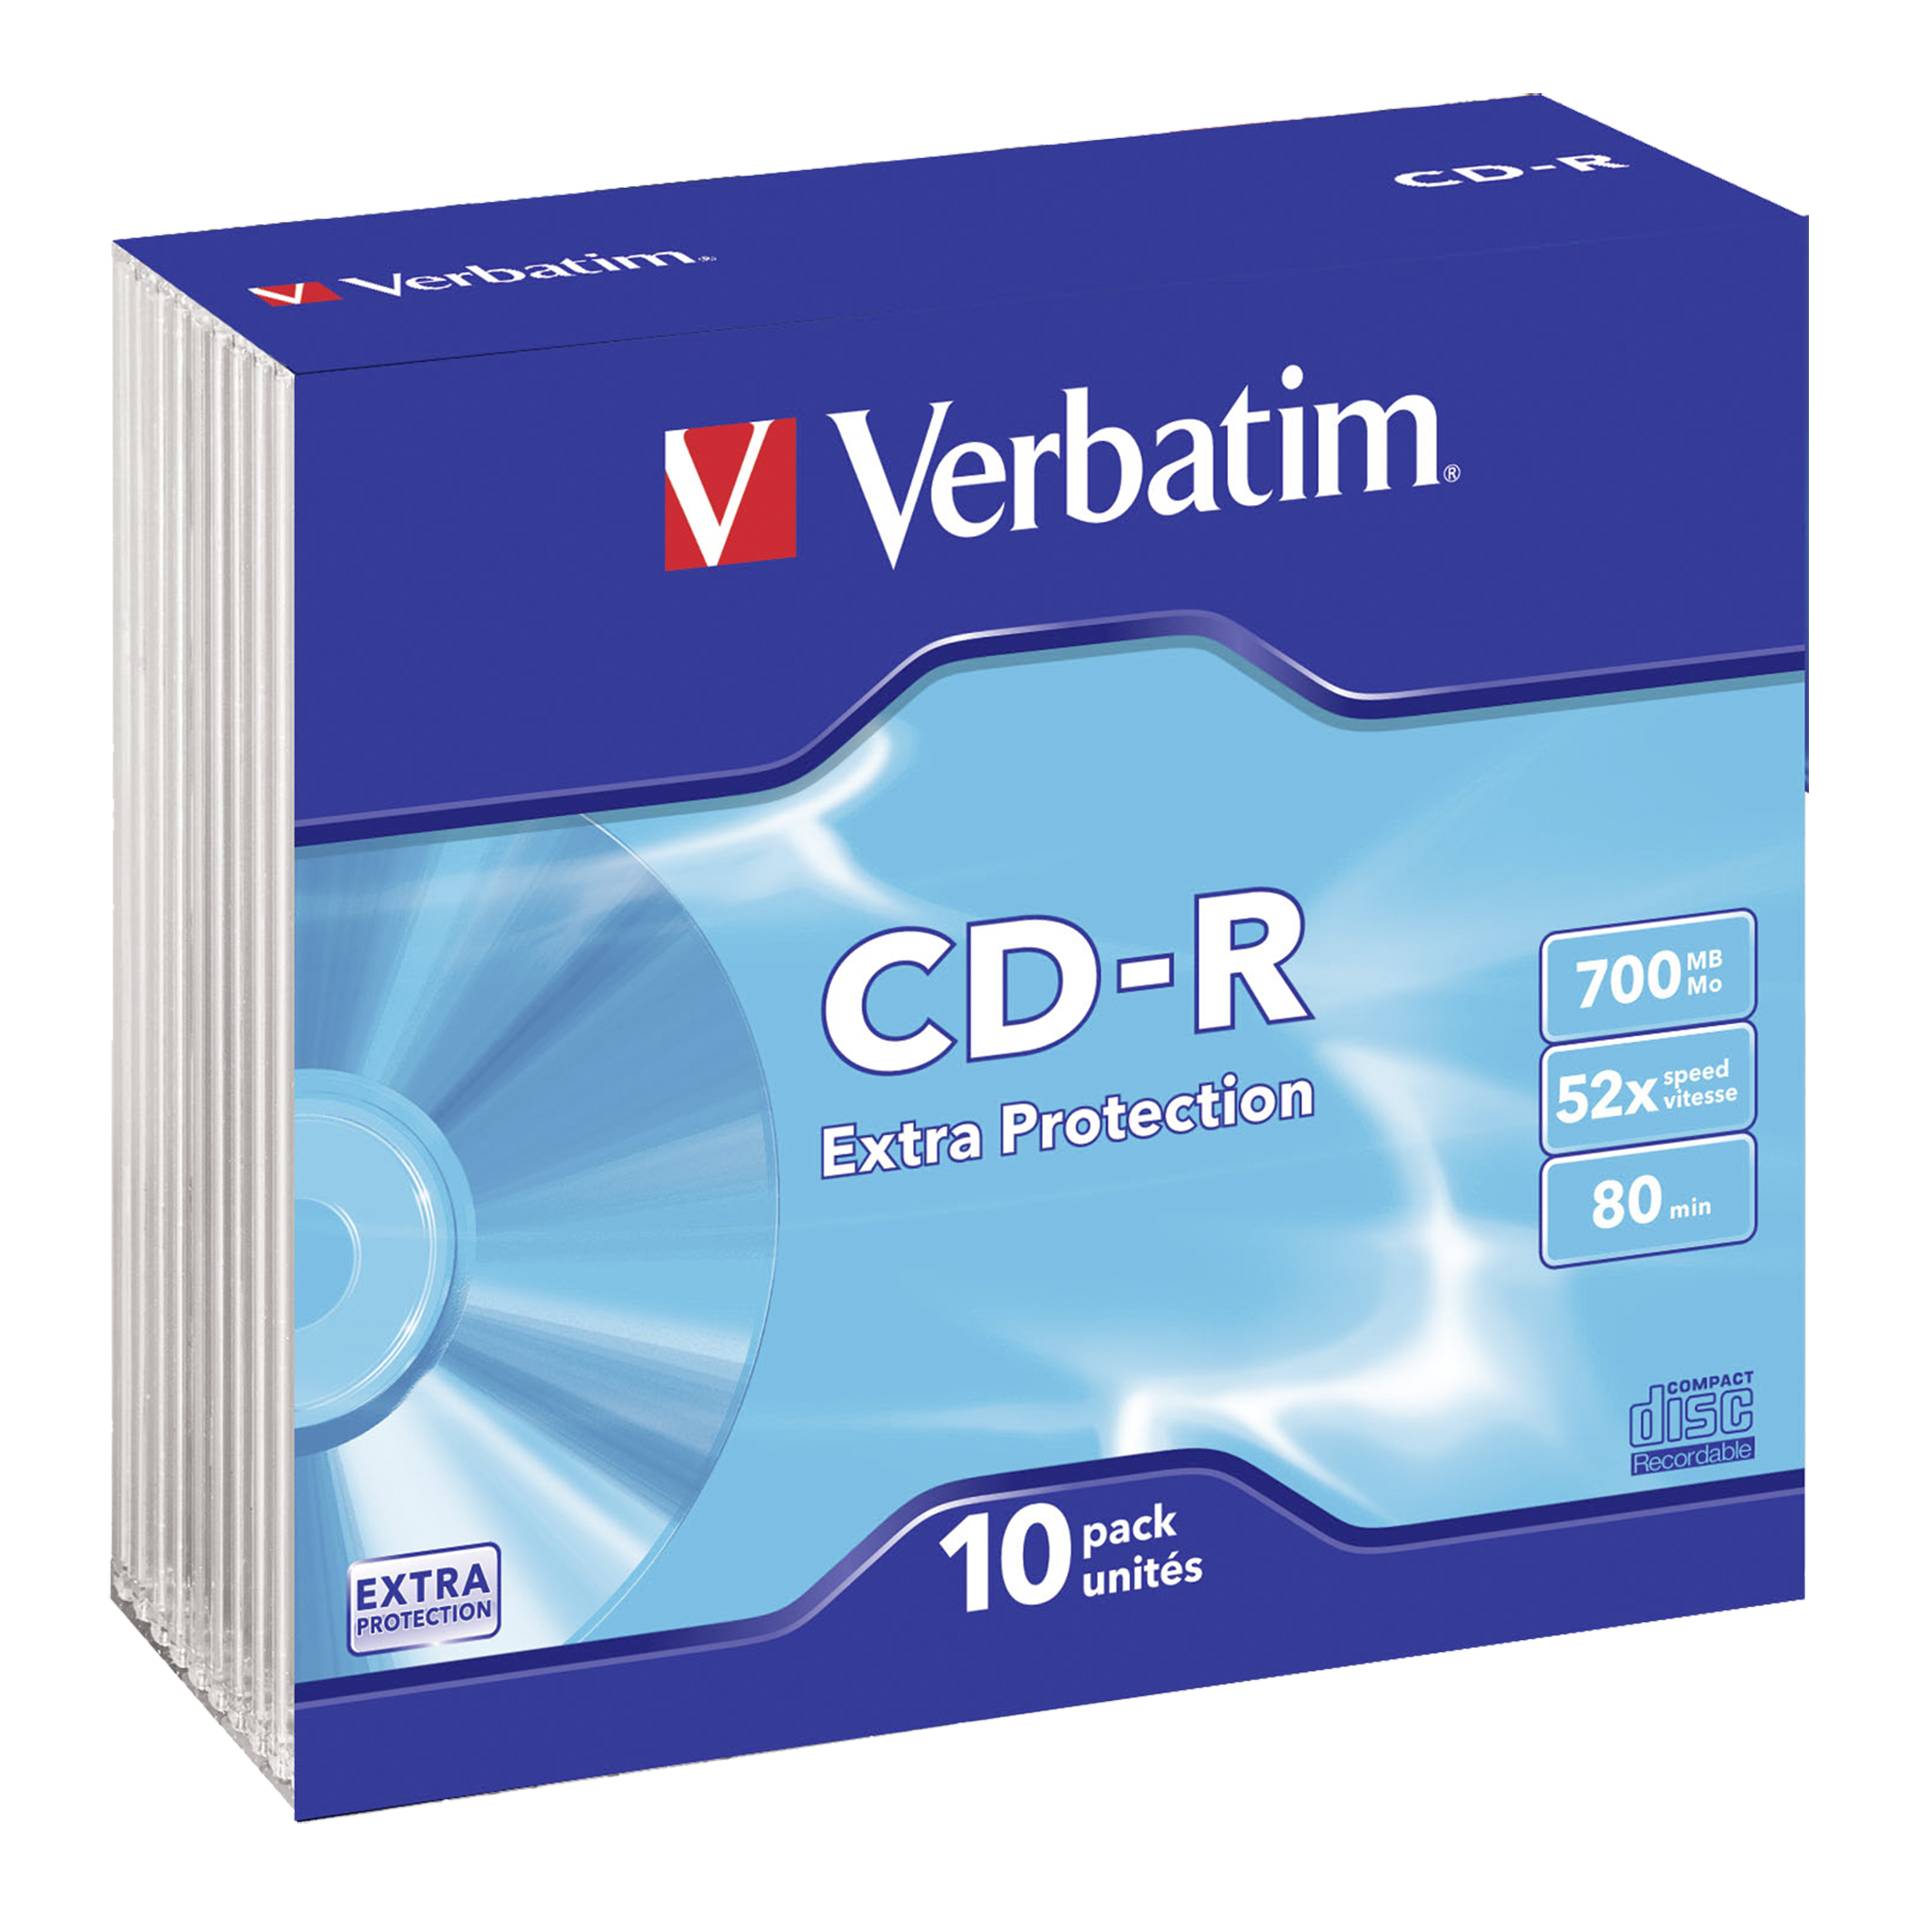 Verbatim Extra Protection CD-R 80min/700MB, 52x, 10er Slimcase